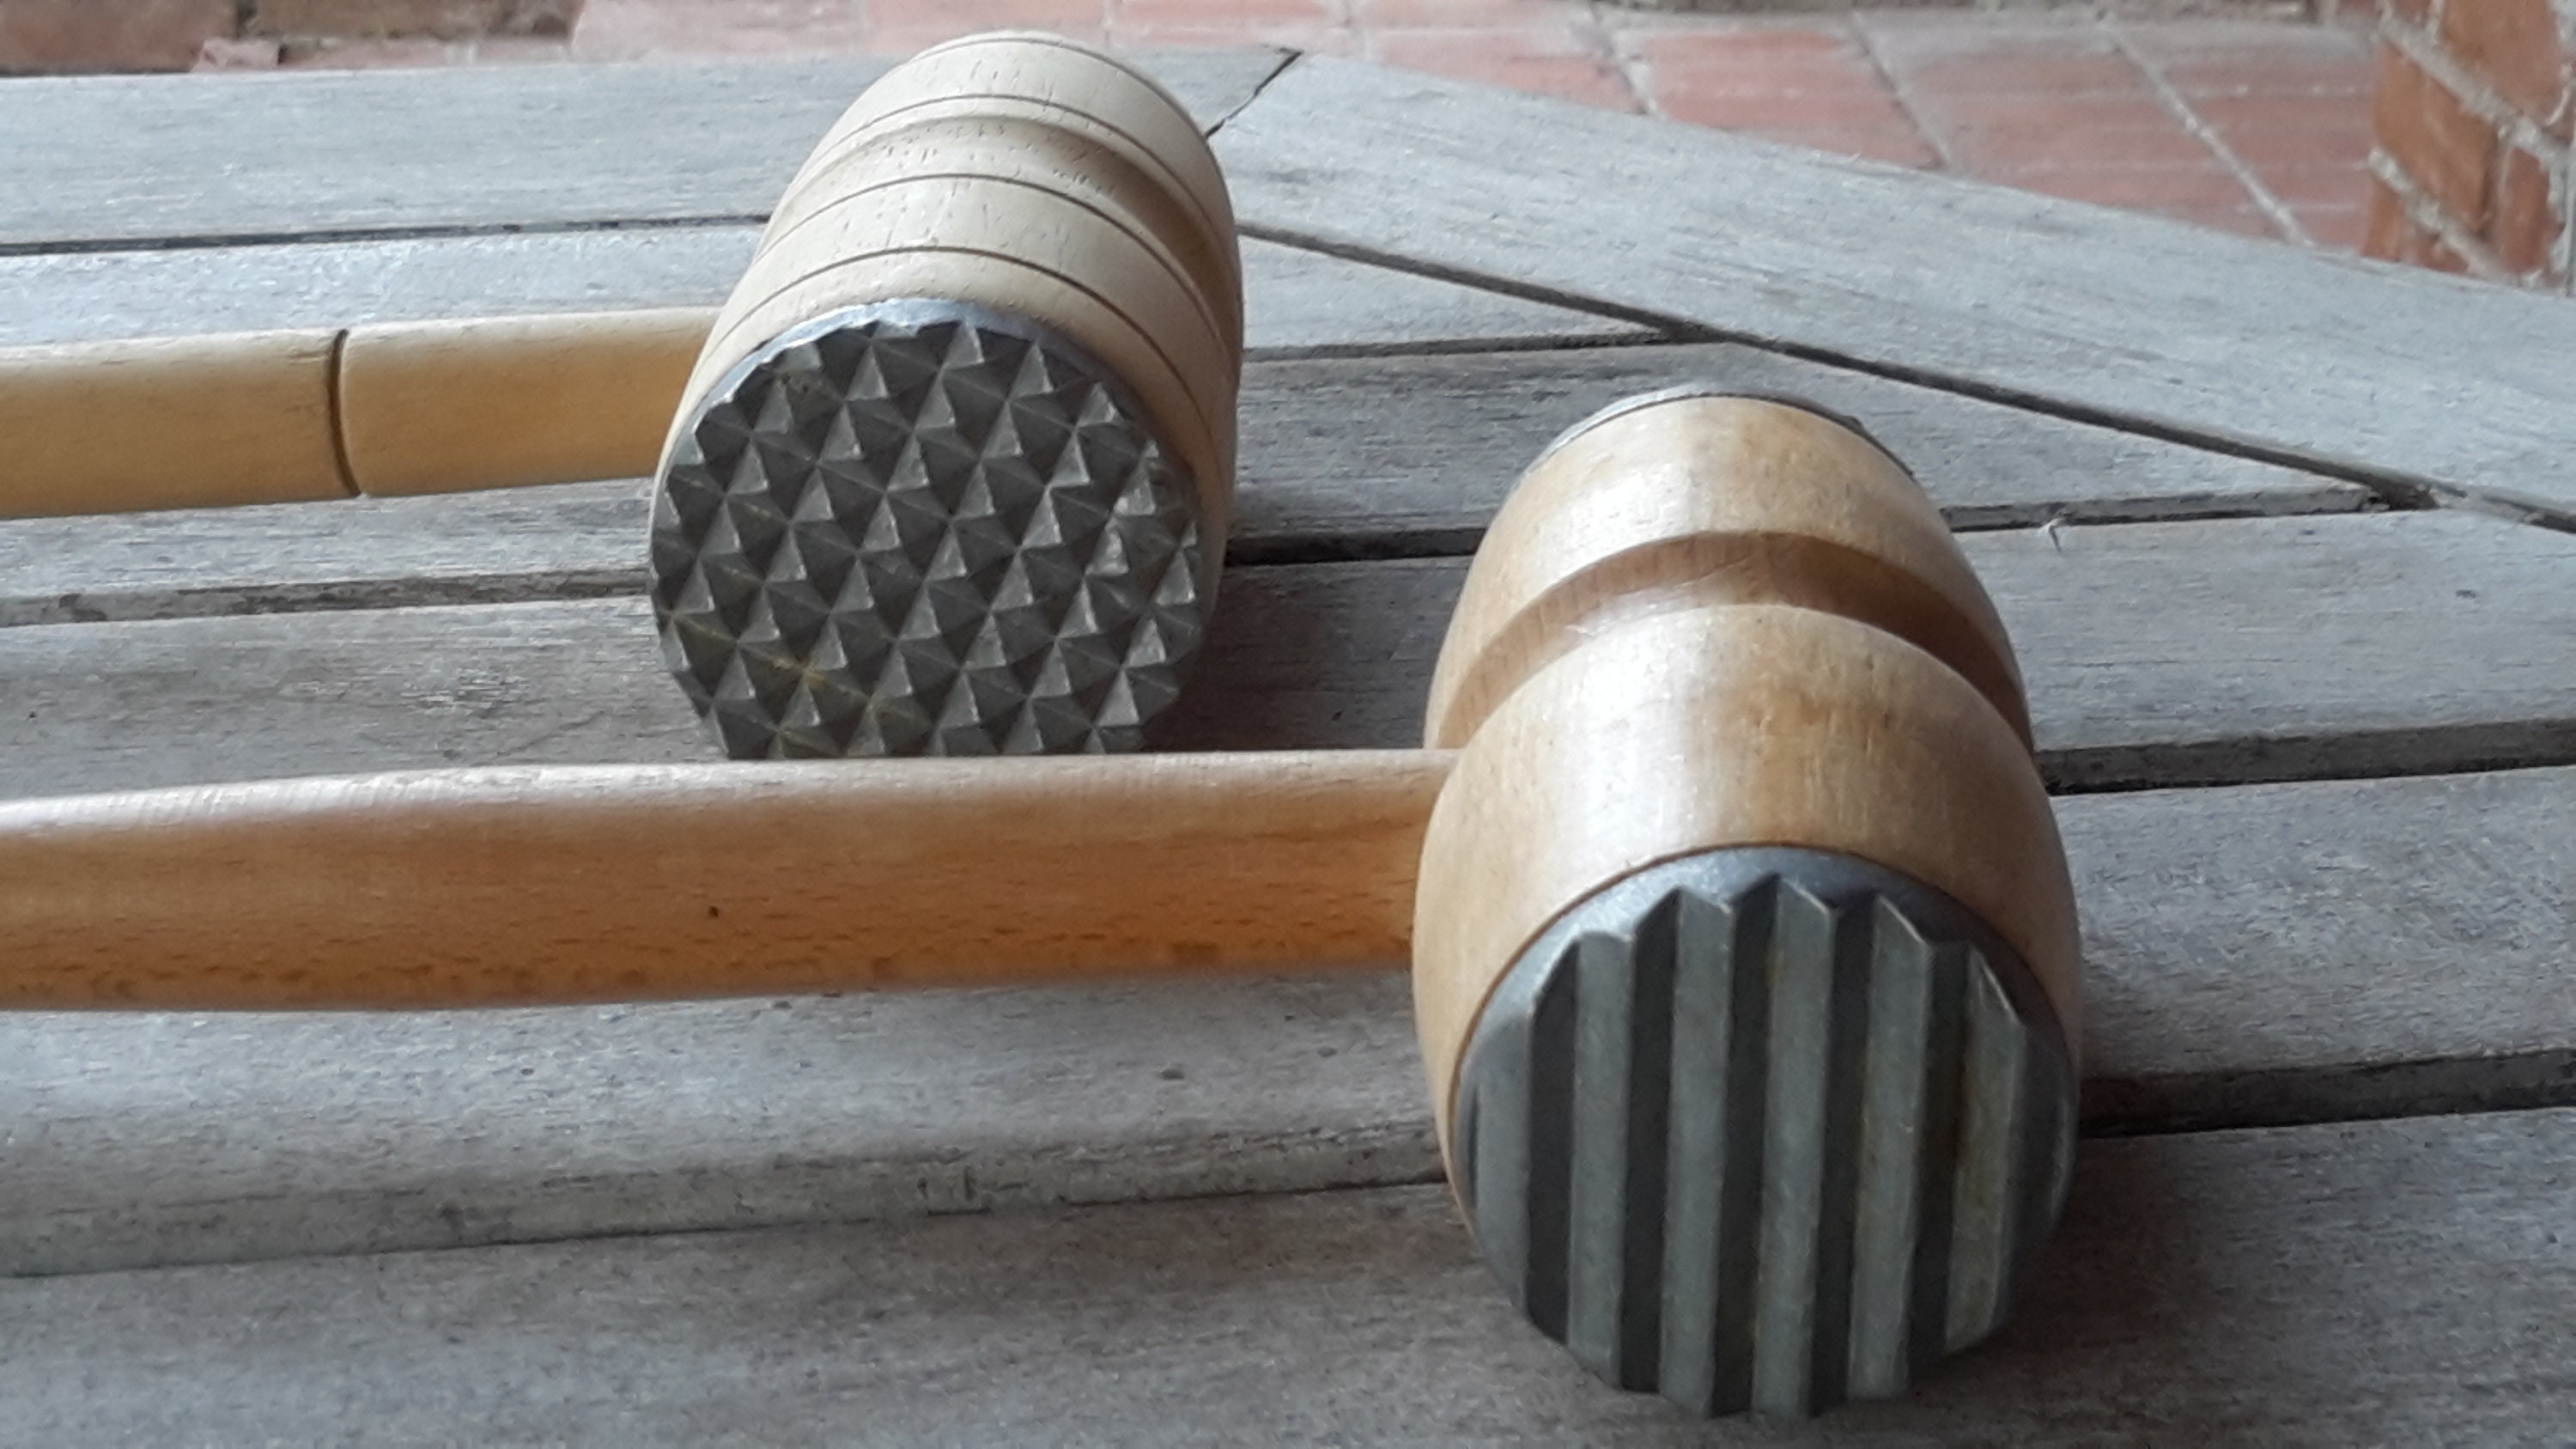 Icinginks Wooden Mallet Hammer Online